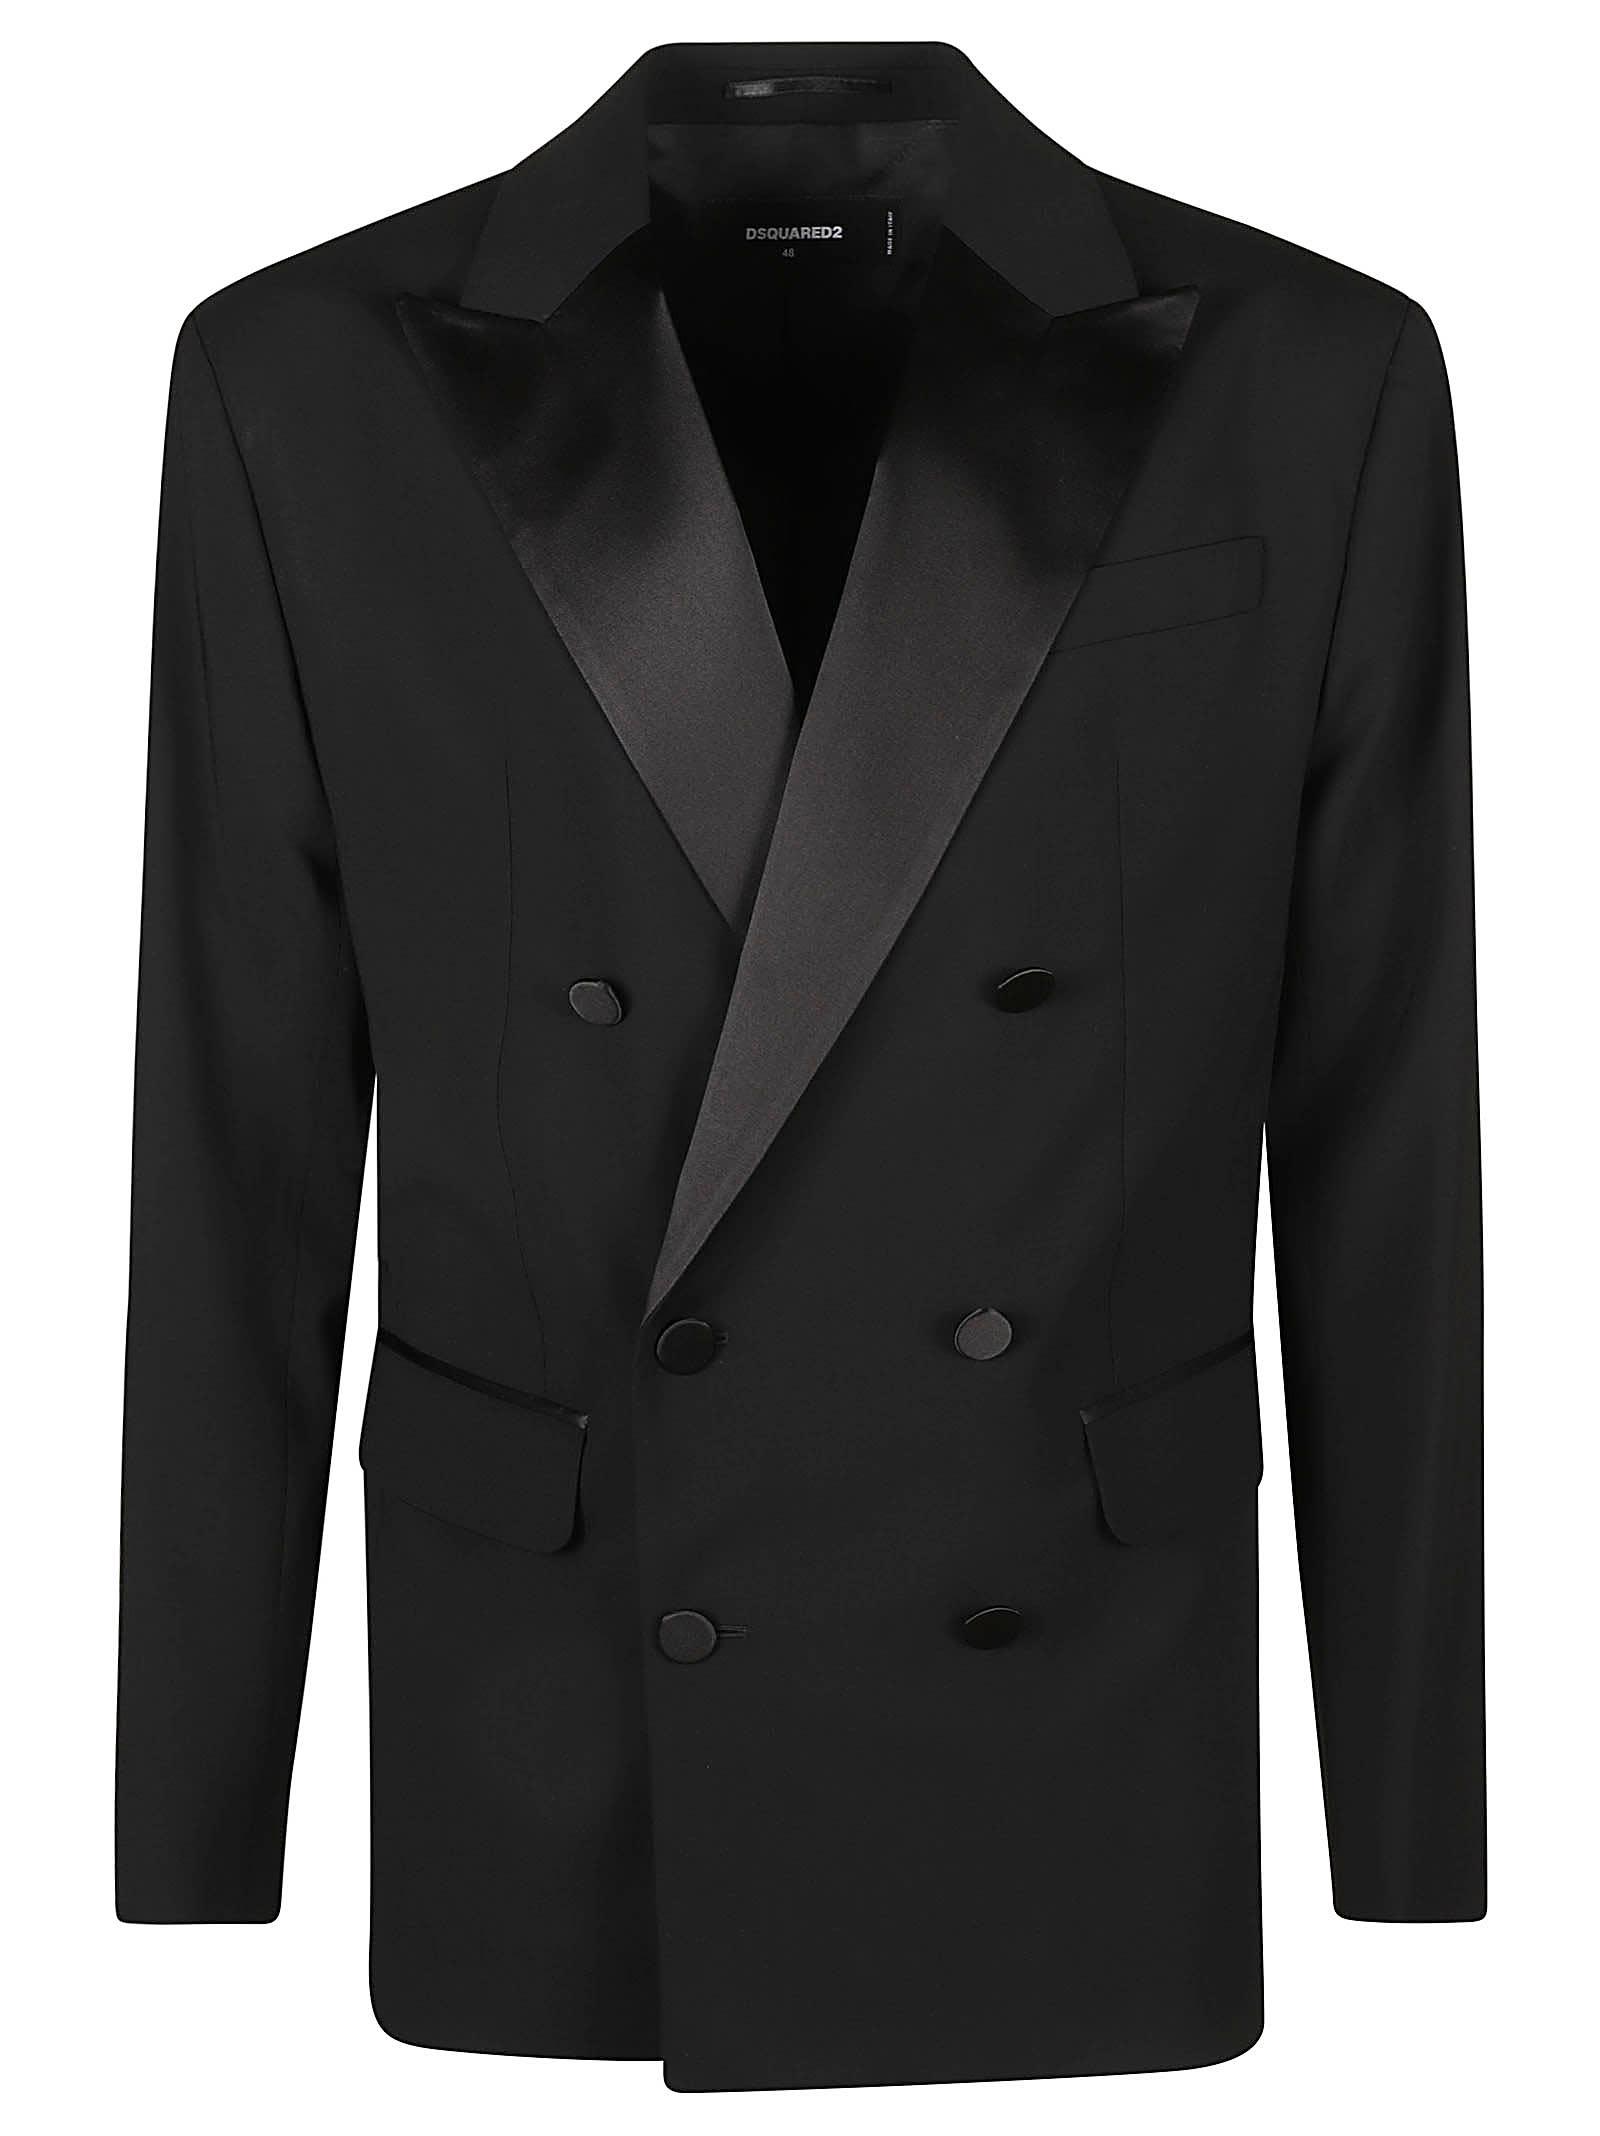 DSquared² Dan Double-breast Dinner Jacket in Black for Men | Lyst